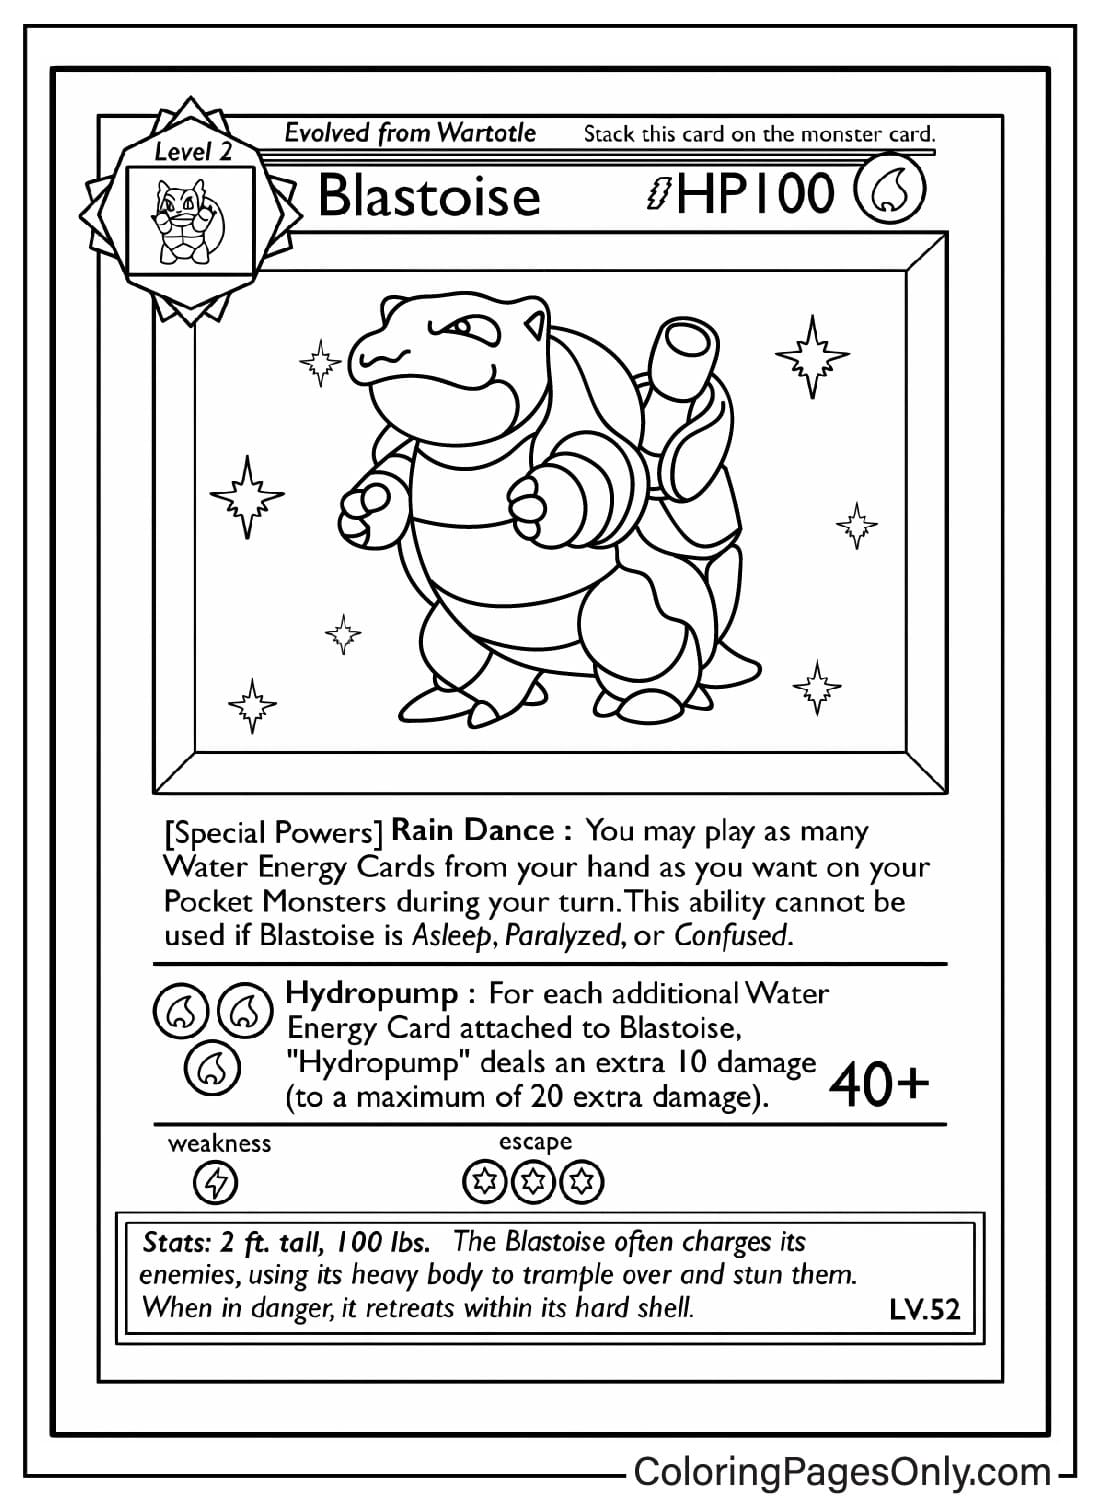 Blastoise Pokemon Card Coloring Sheet from Pokemon Card